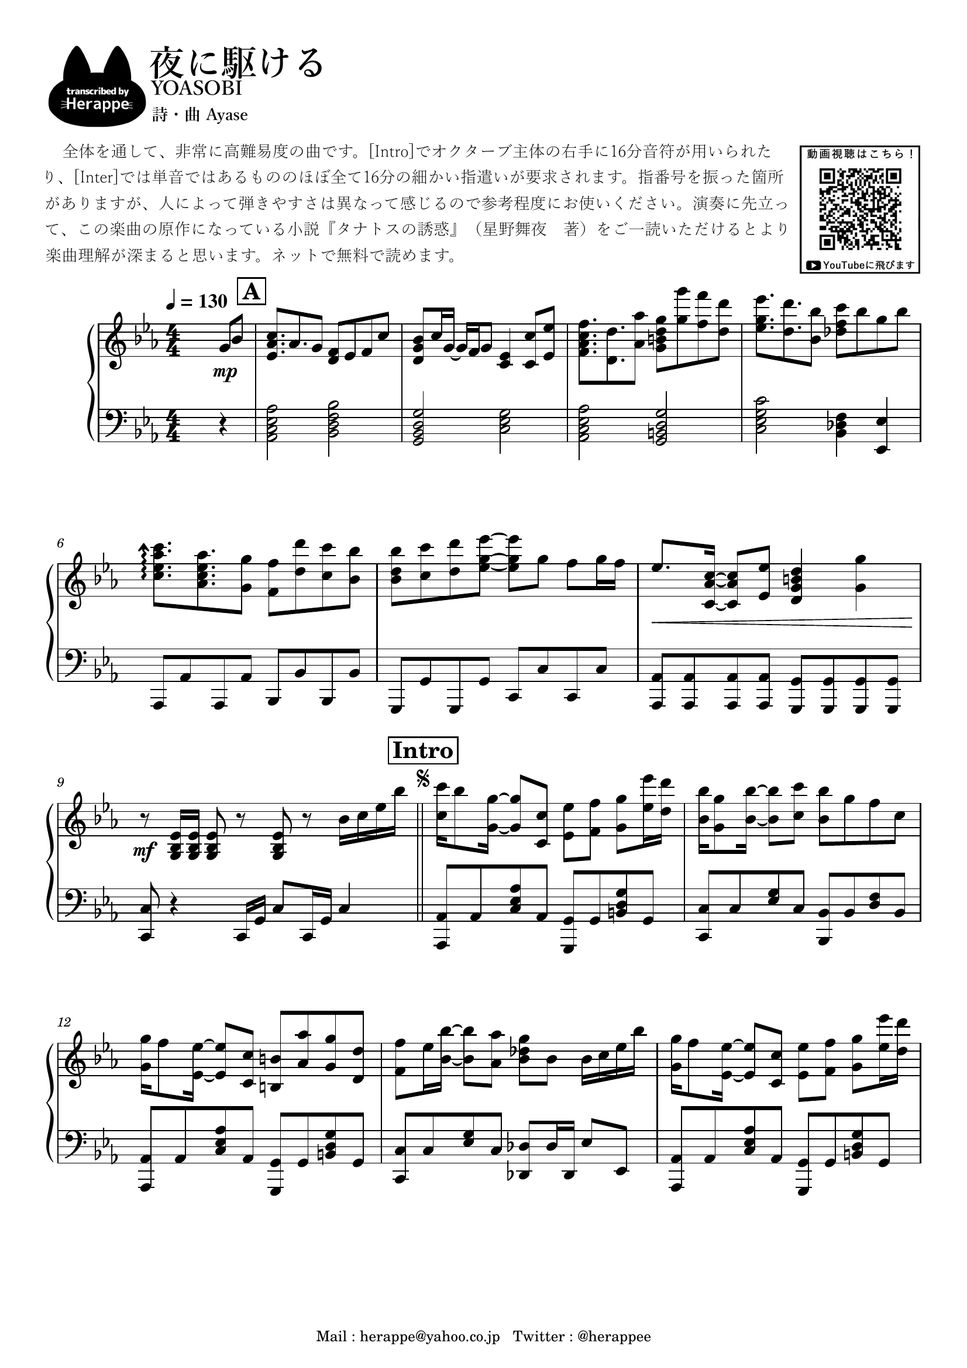 YOASOBI - YOASOBI11曲('19~'21)楽譜集 by へらっぺ